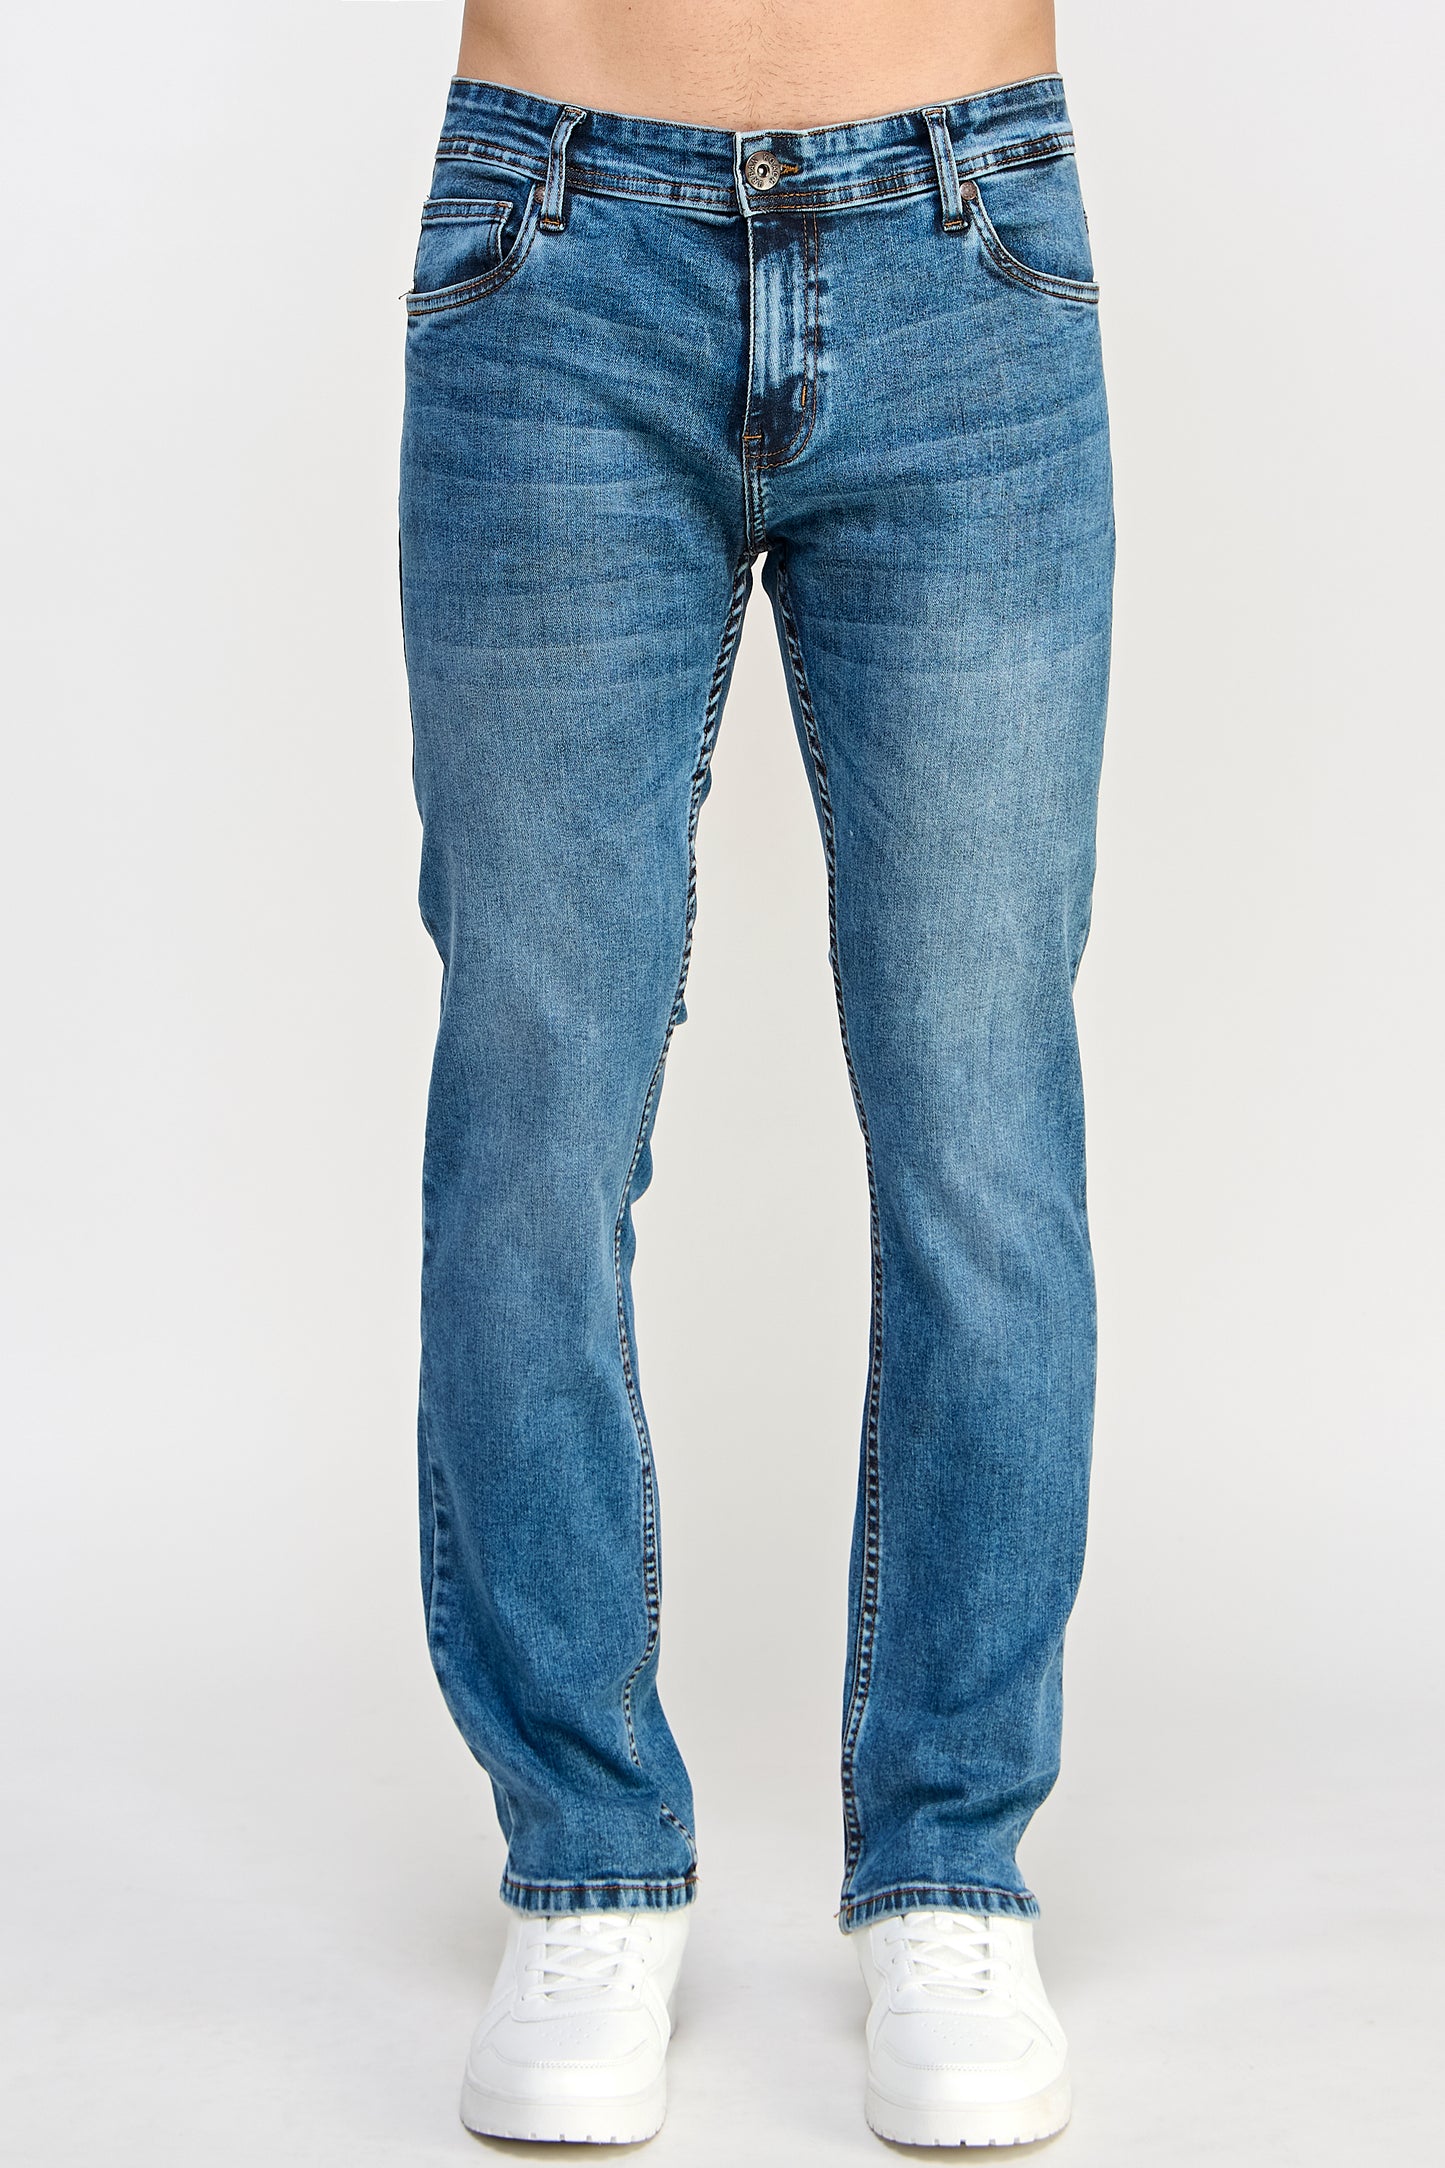 Azure Blue Denim Jeans